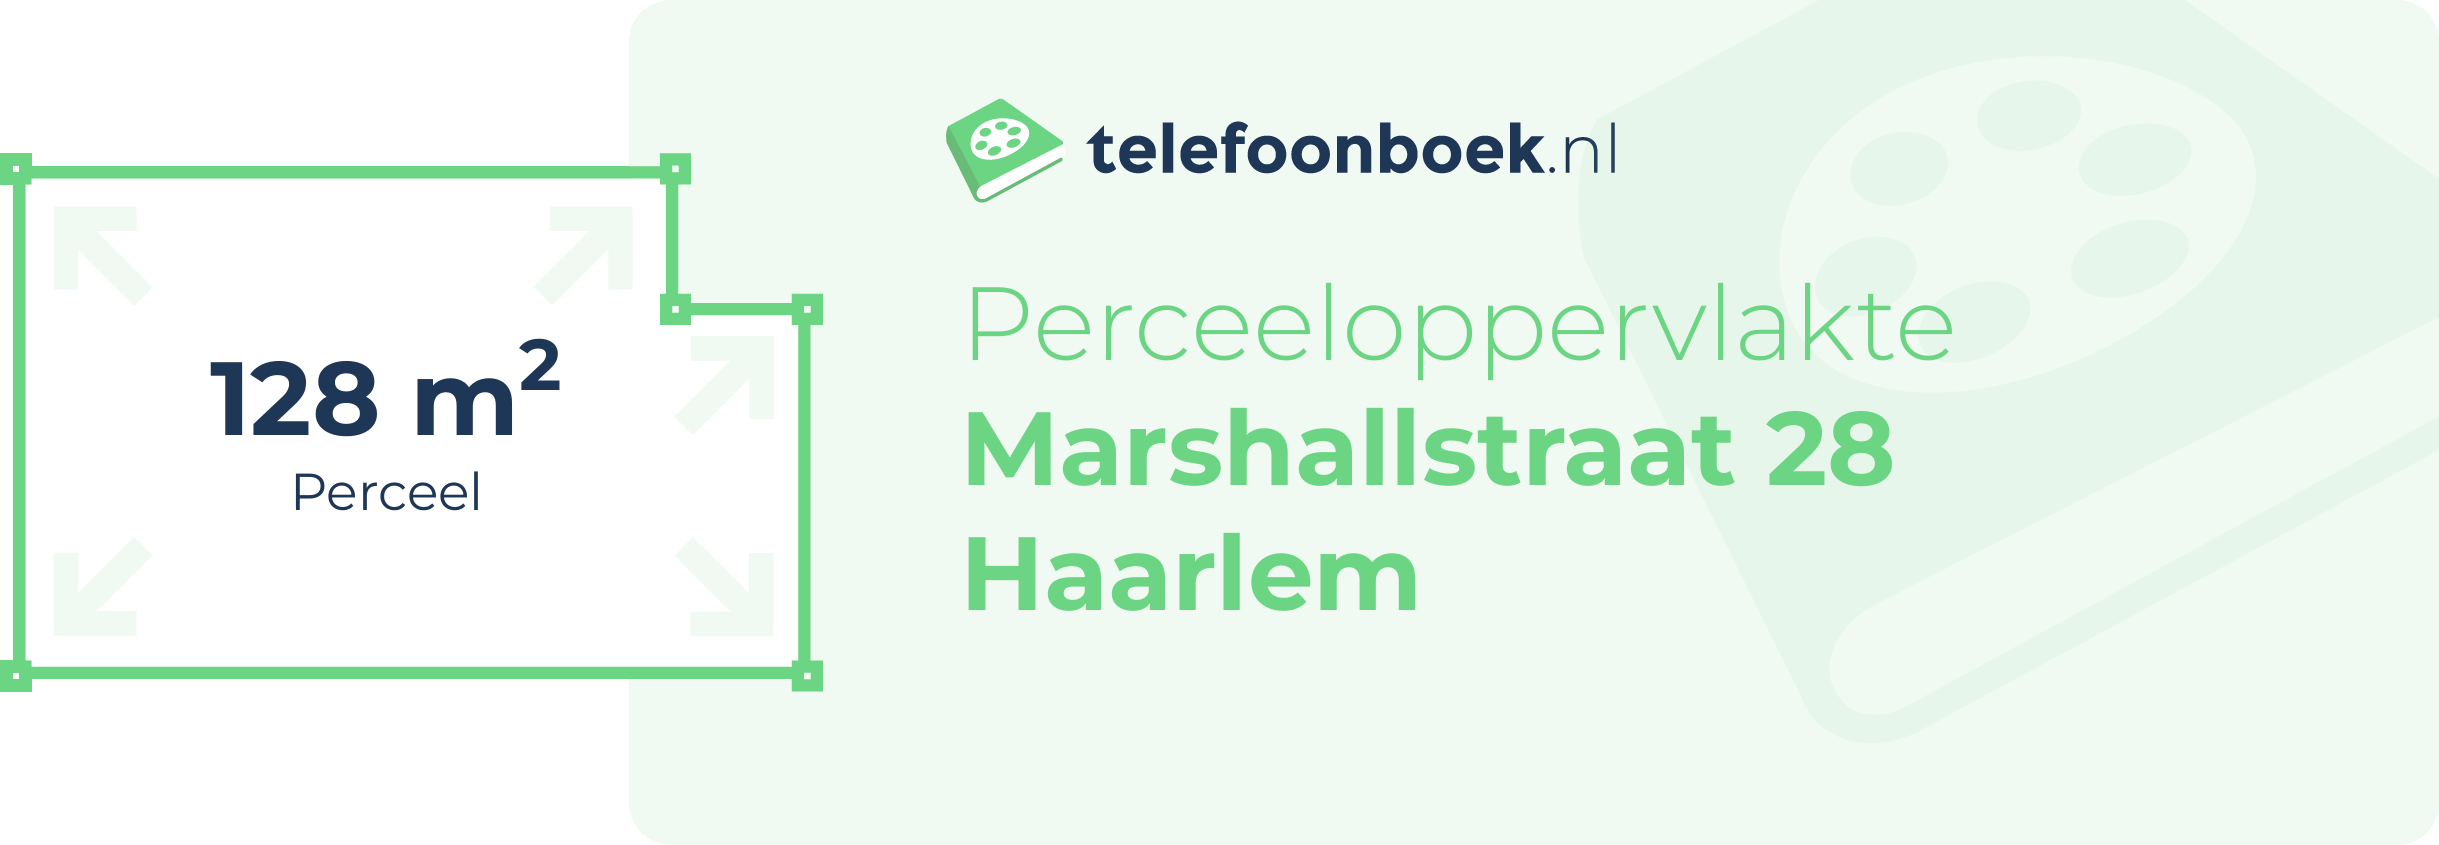 Perceeloppervlakte Marshallstraat 28 Haarlem